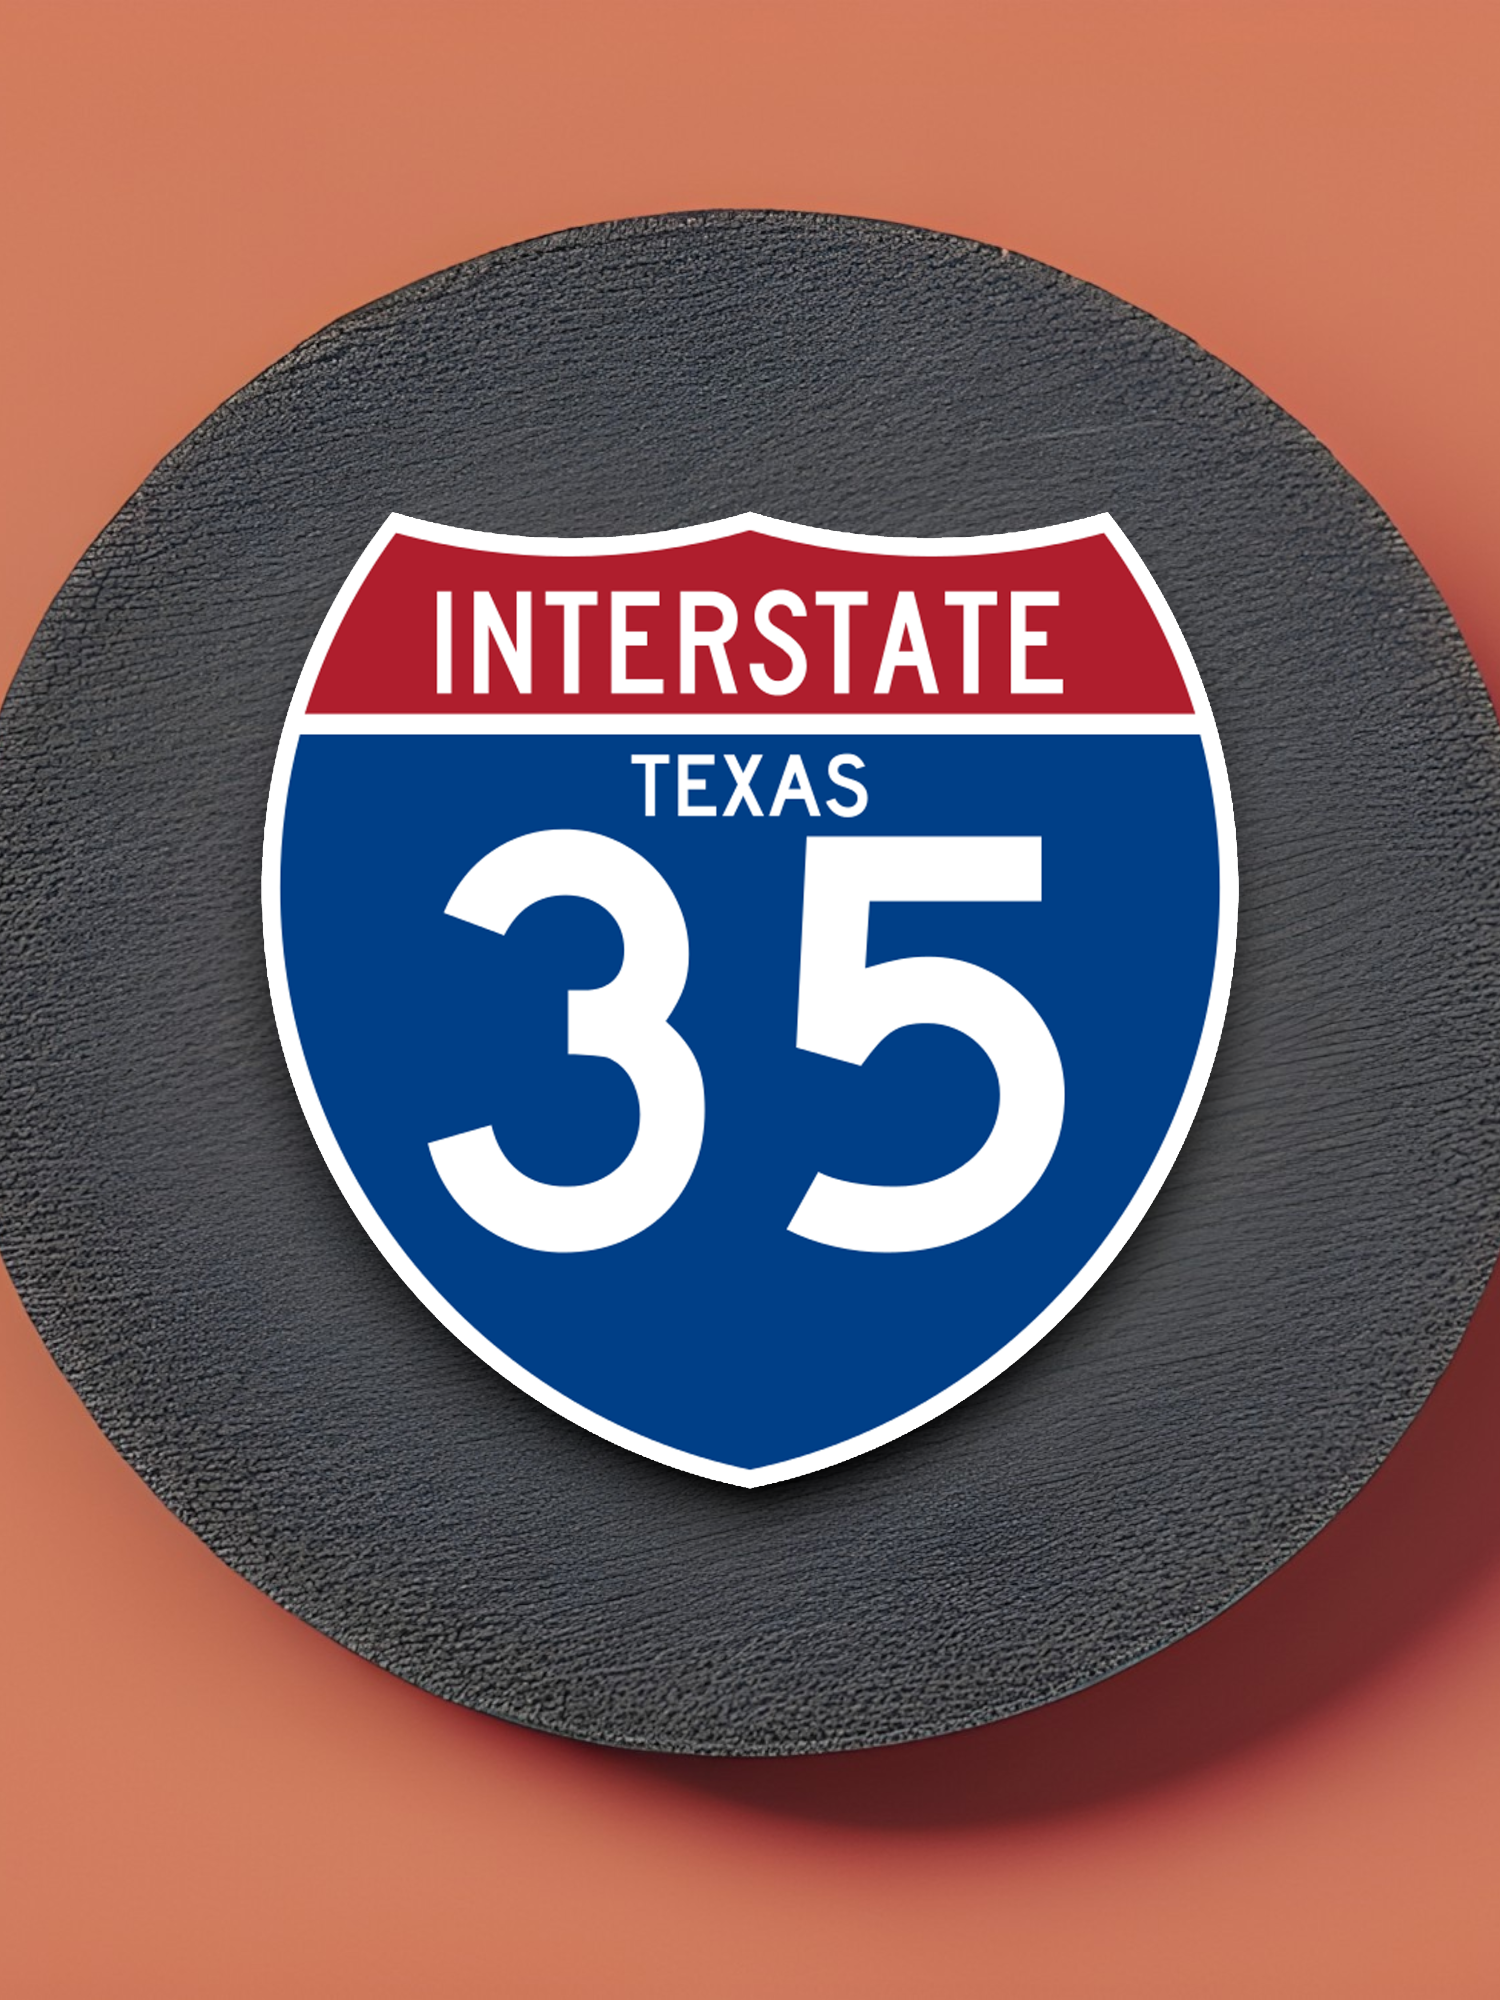 Interstate I-35 Texas - Road Sign Sticker